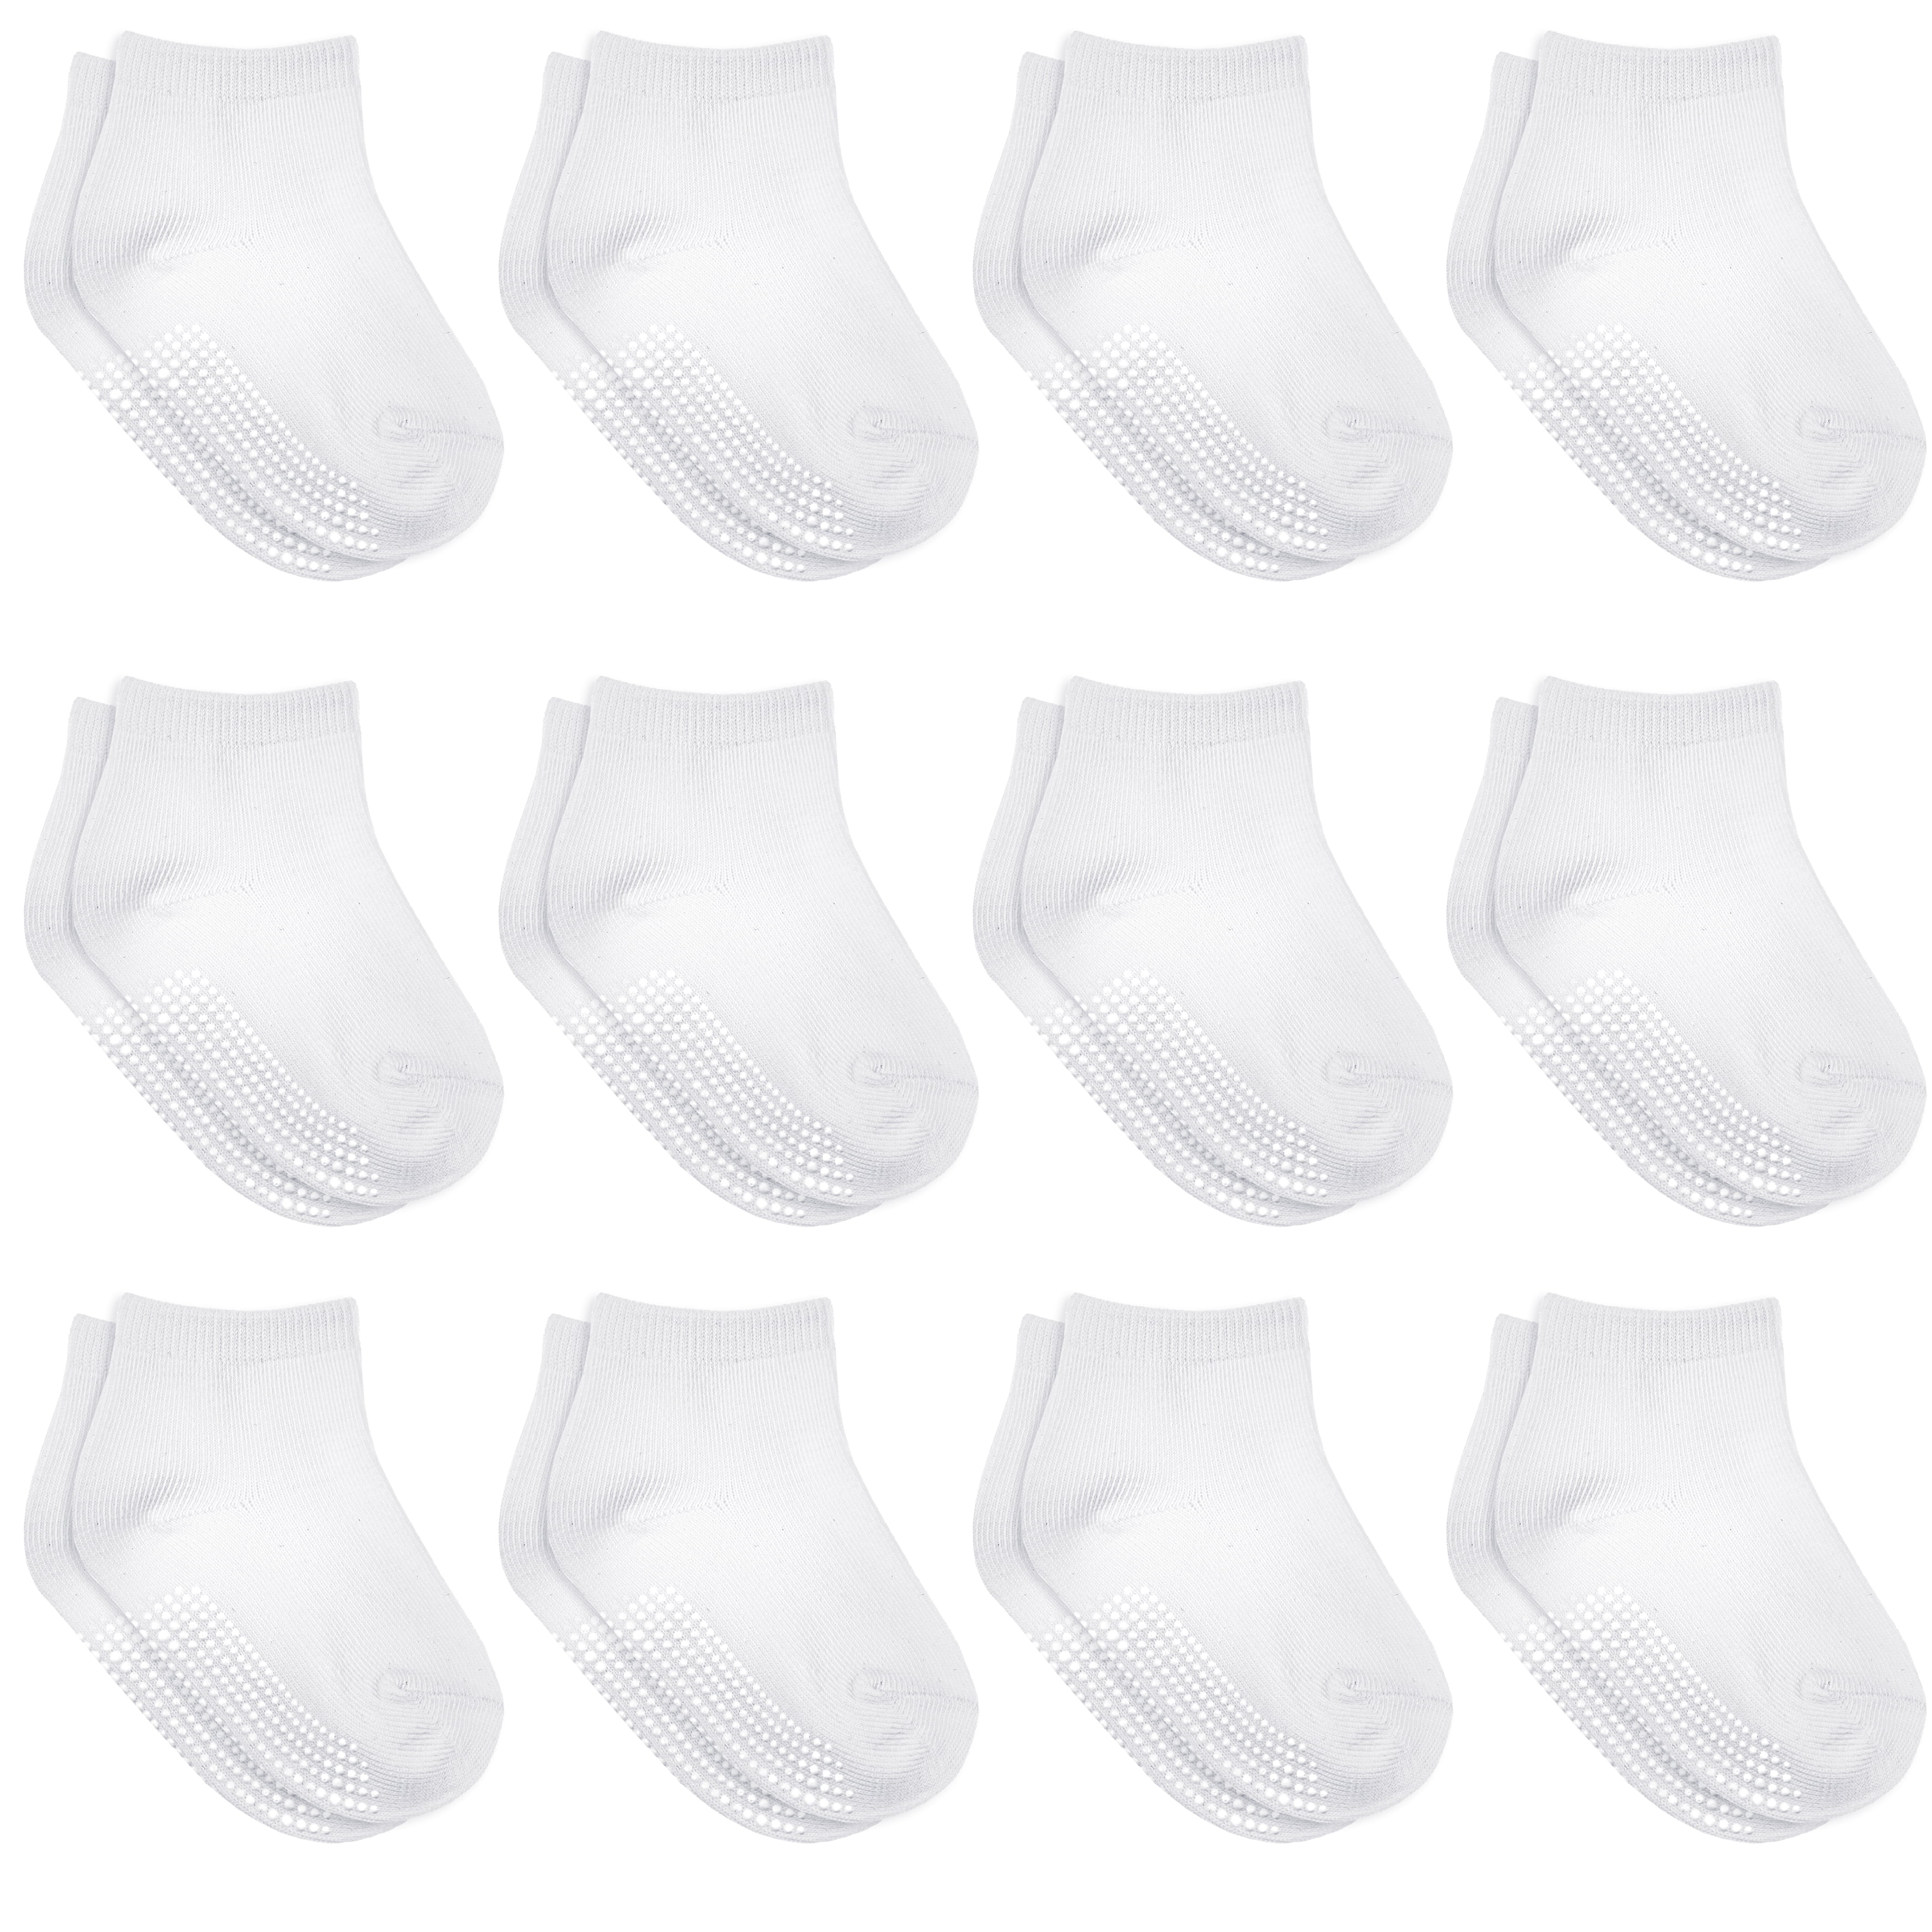 Adorel Baby Kids Fleece Ankle Socks Winter Pack of 6 